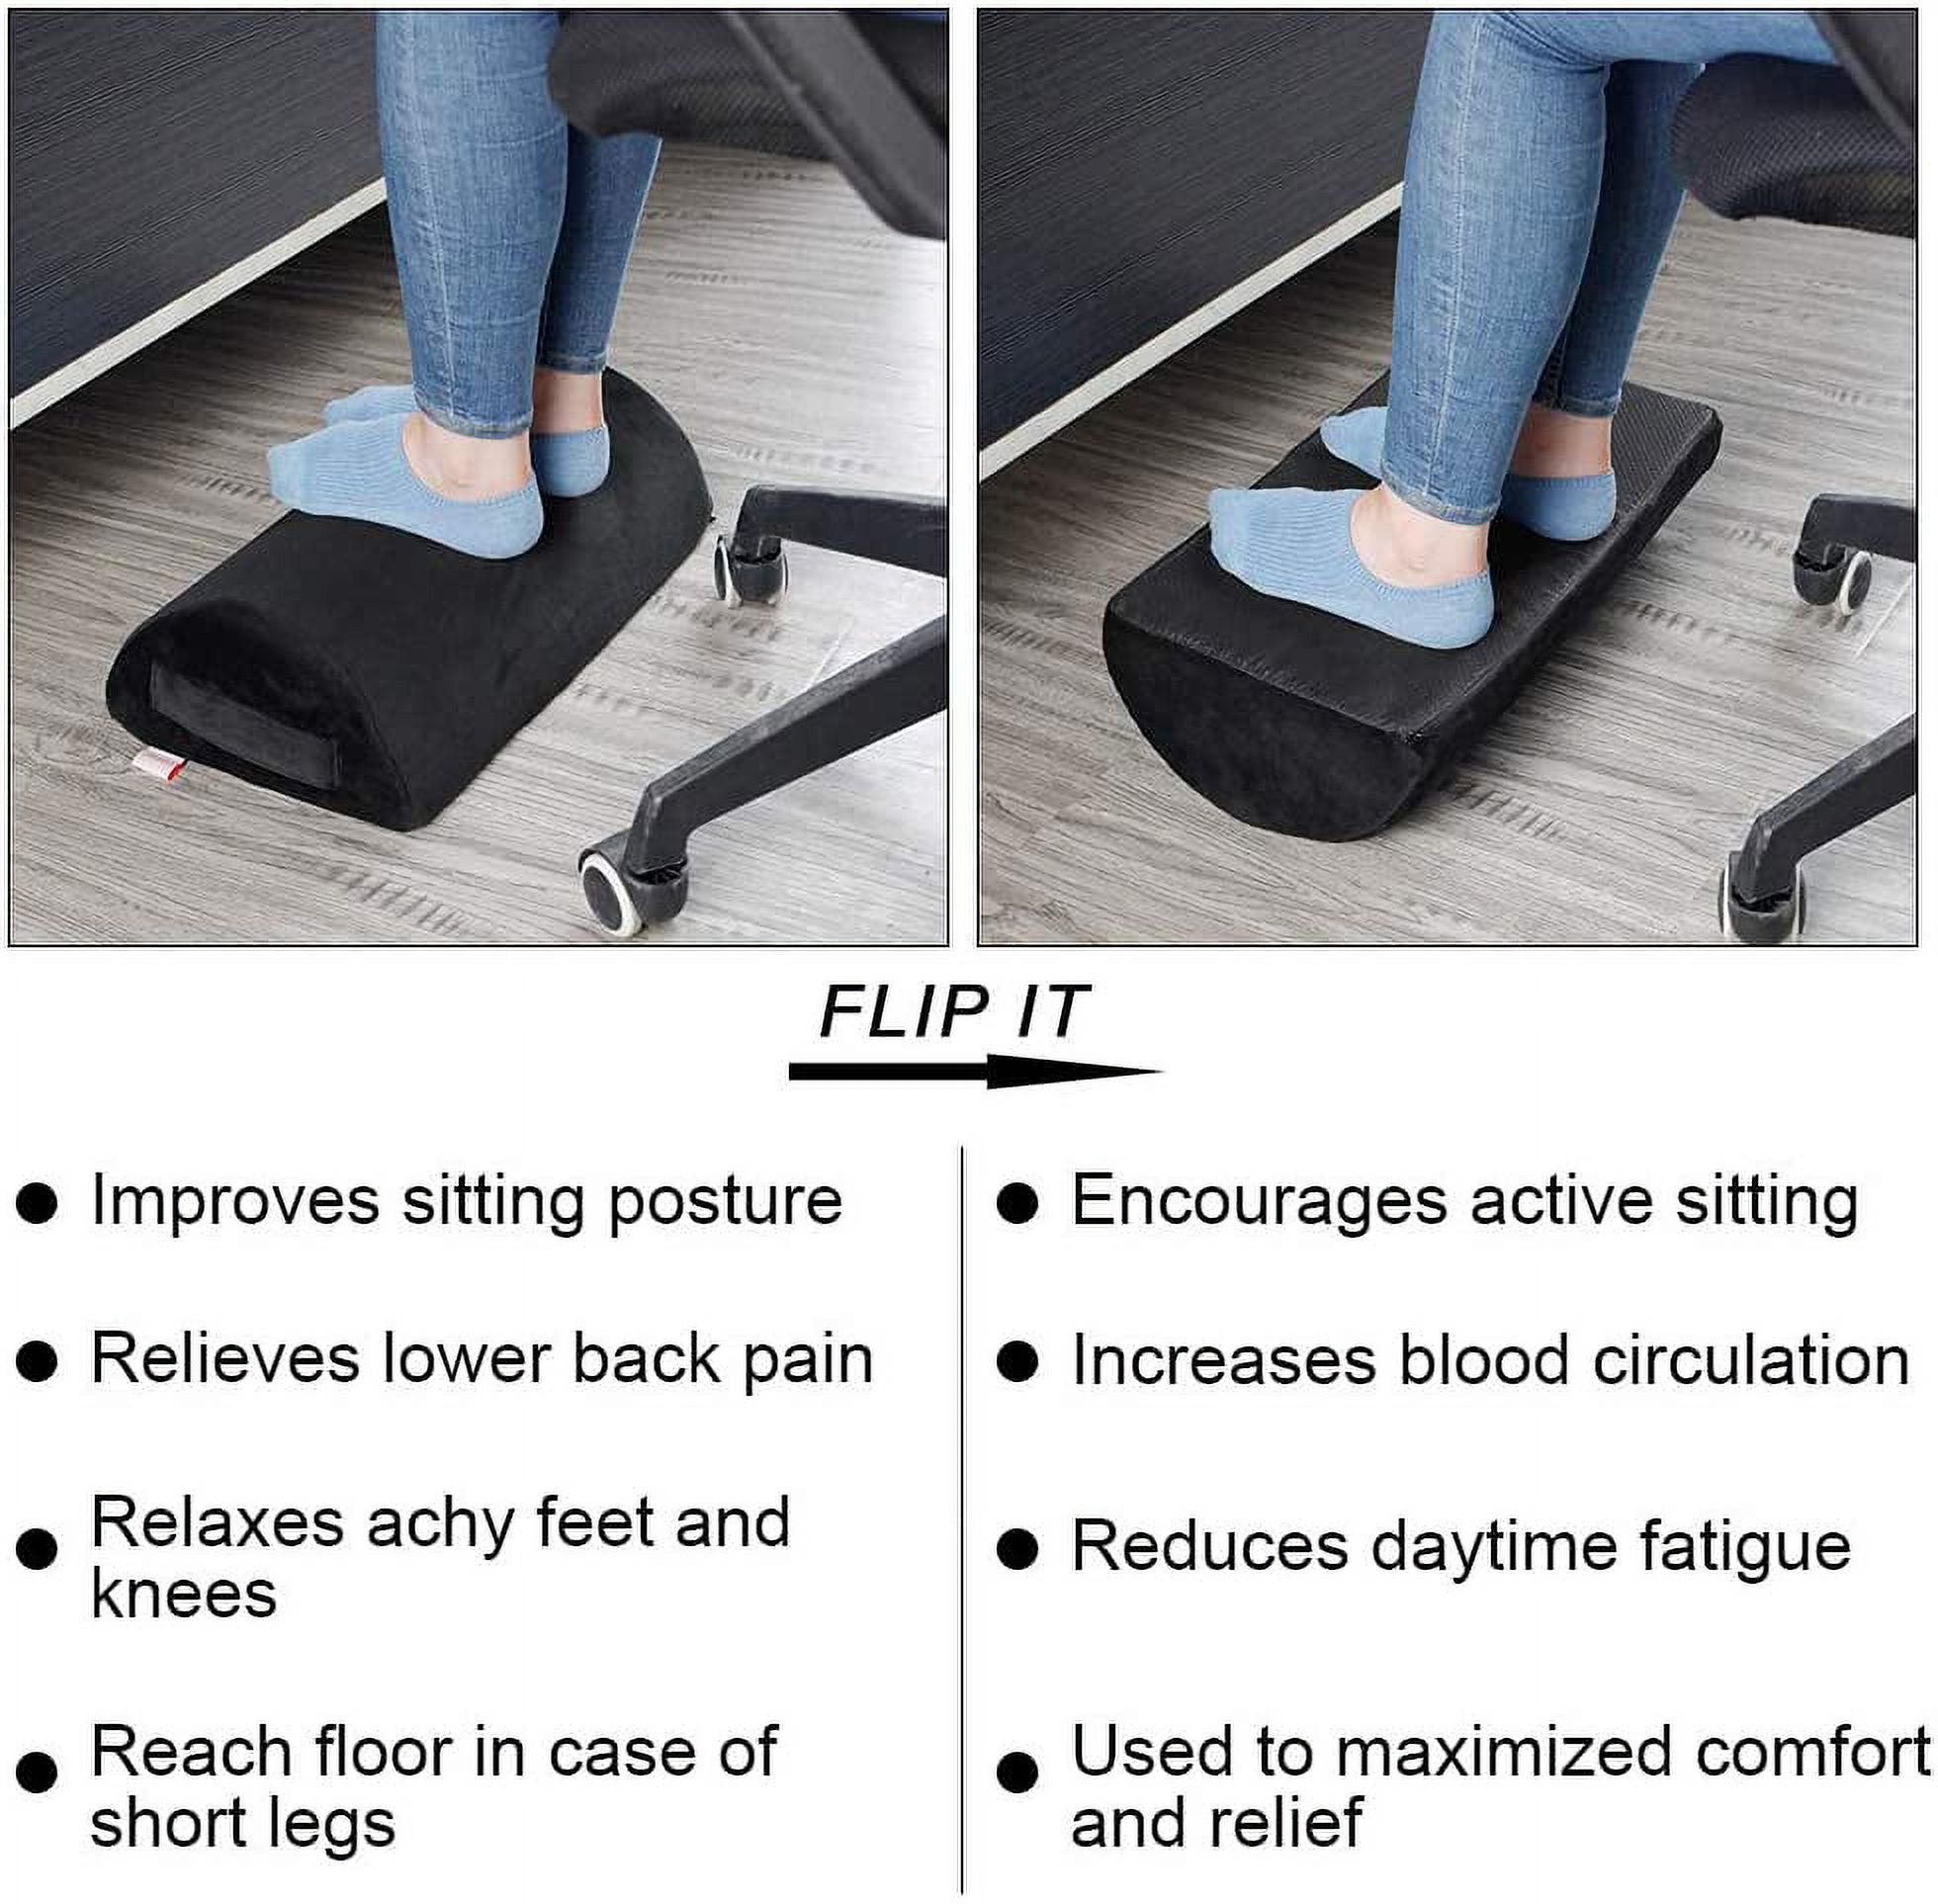 Ergonomic Foot Rest Cushion Under Desk with High Rebound Ergonomic Foam Non-Slip Half-Cylinder Footstool Footrest Ottoman for Home Office Desk Airplane Travel (Black, 2 PCS) - image 3 of 8